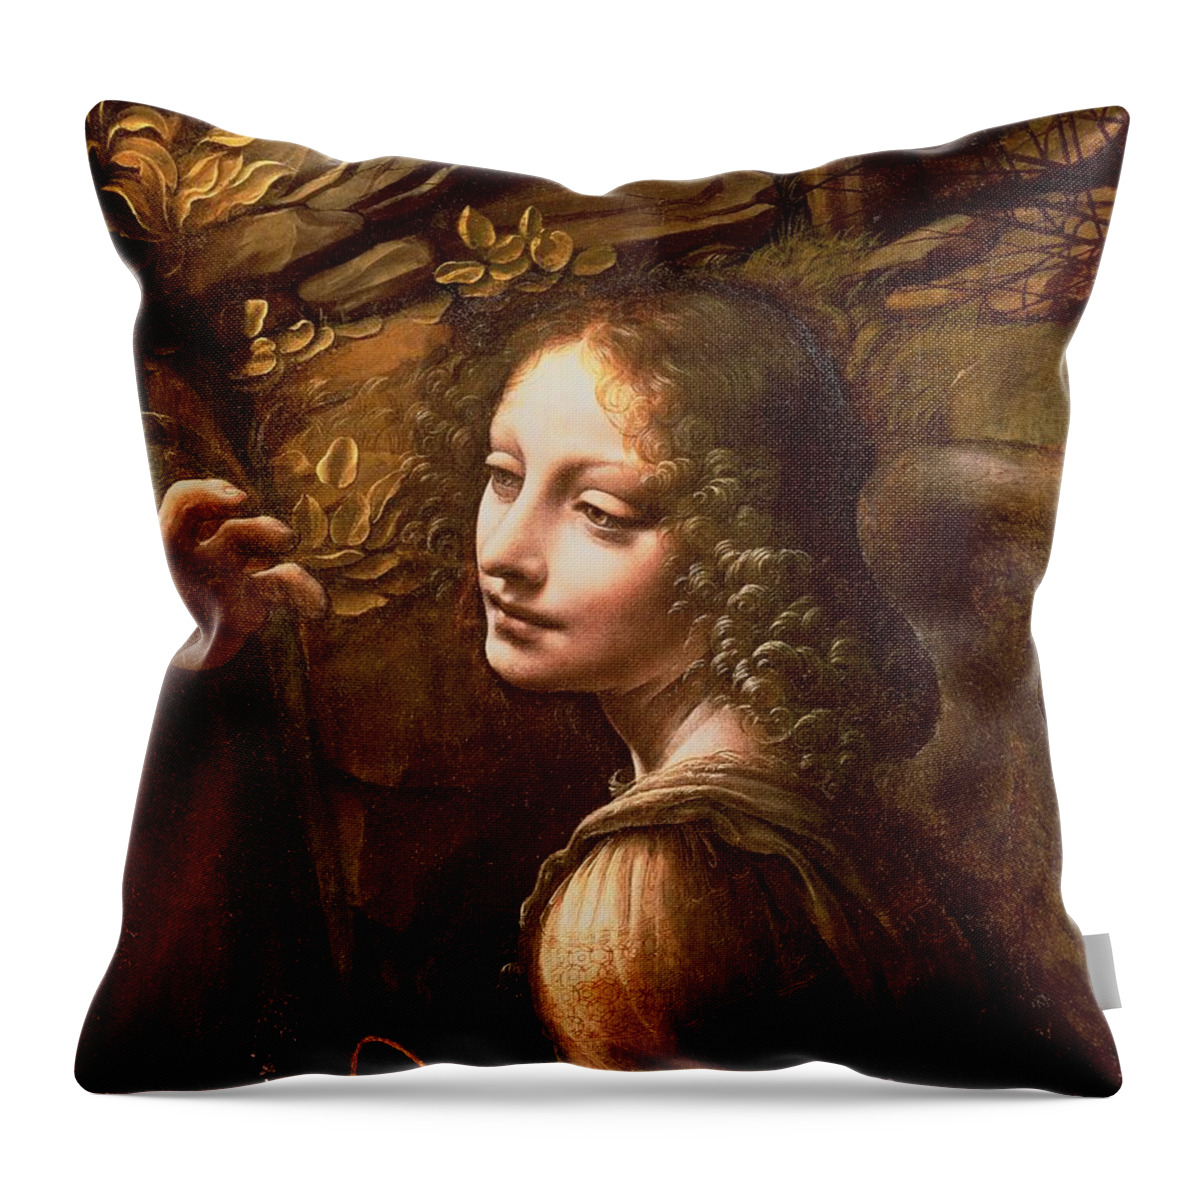 Leonardo Da Vinci Throw Pillow featuring the painting Detail of the Angel from The Virgin of the Rocks by Leonardo Da Vinci